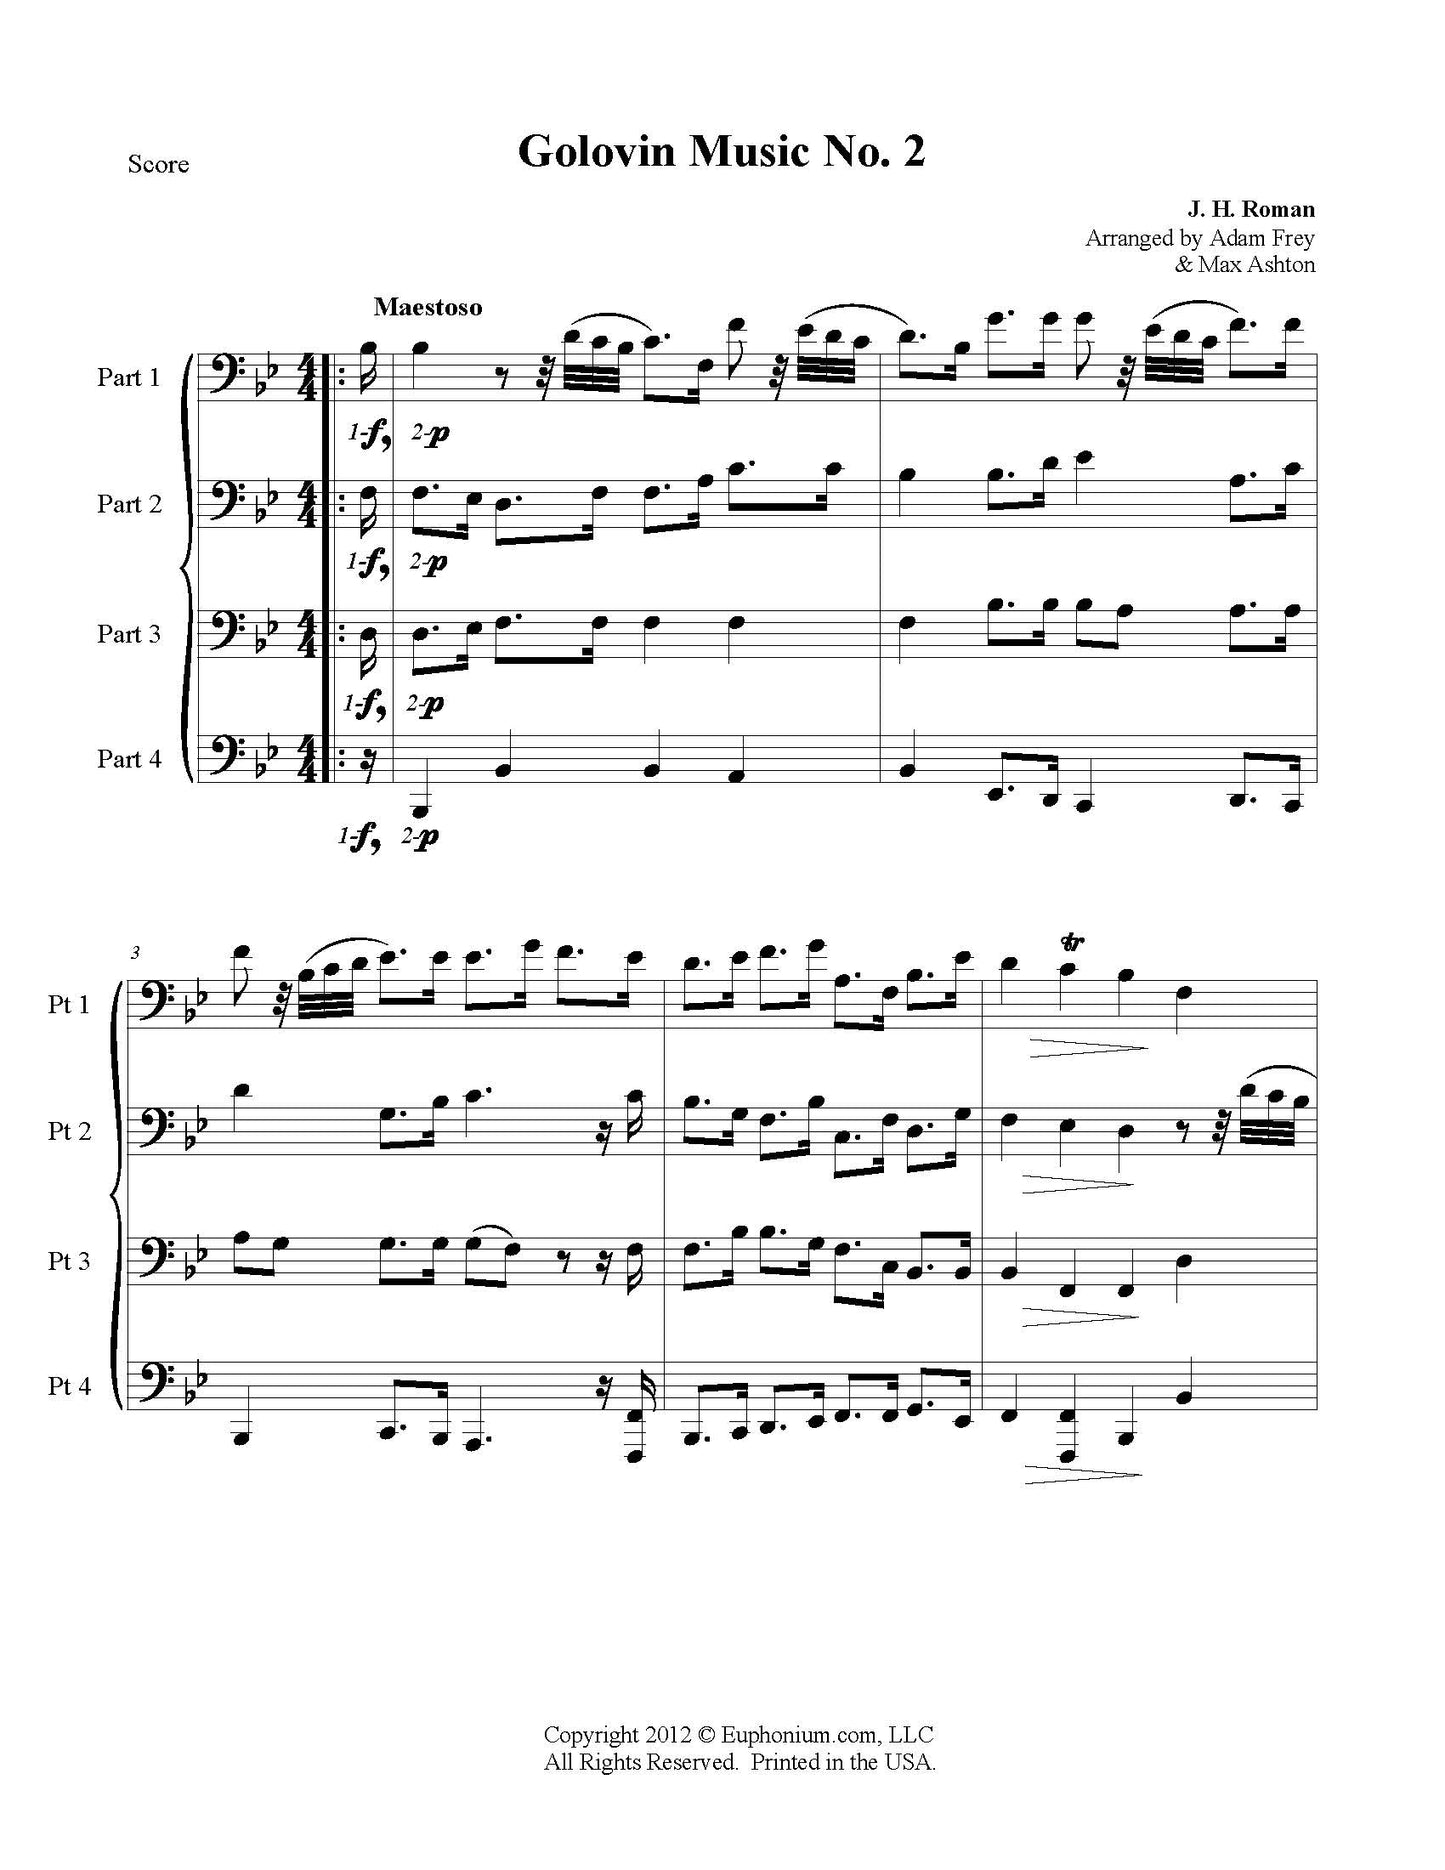 Roman - Golovin Music No. 2